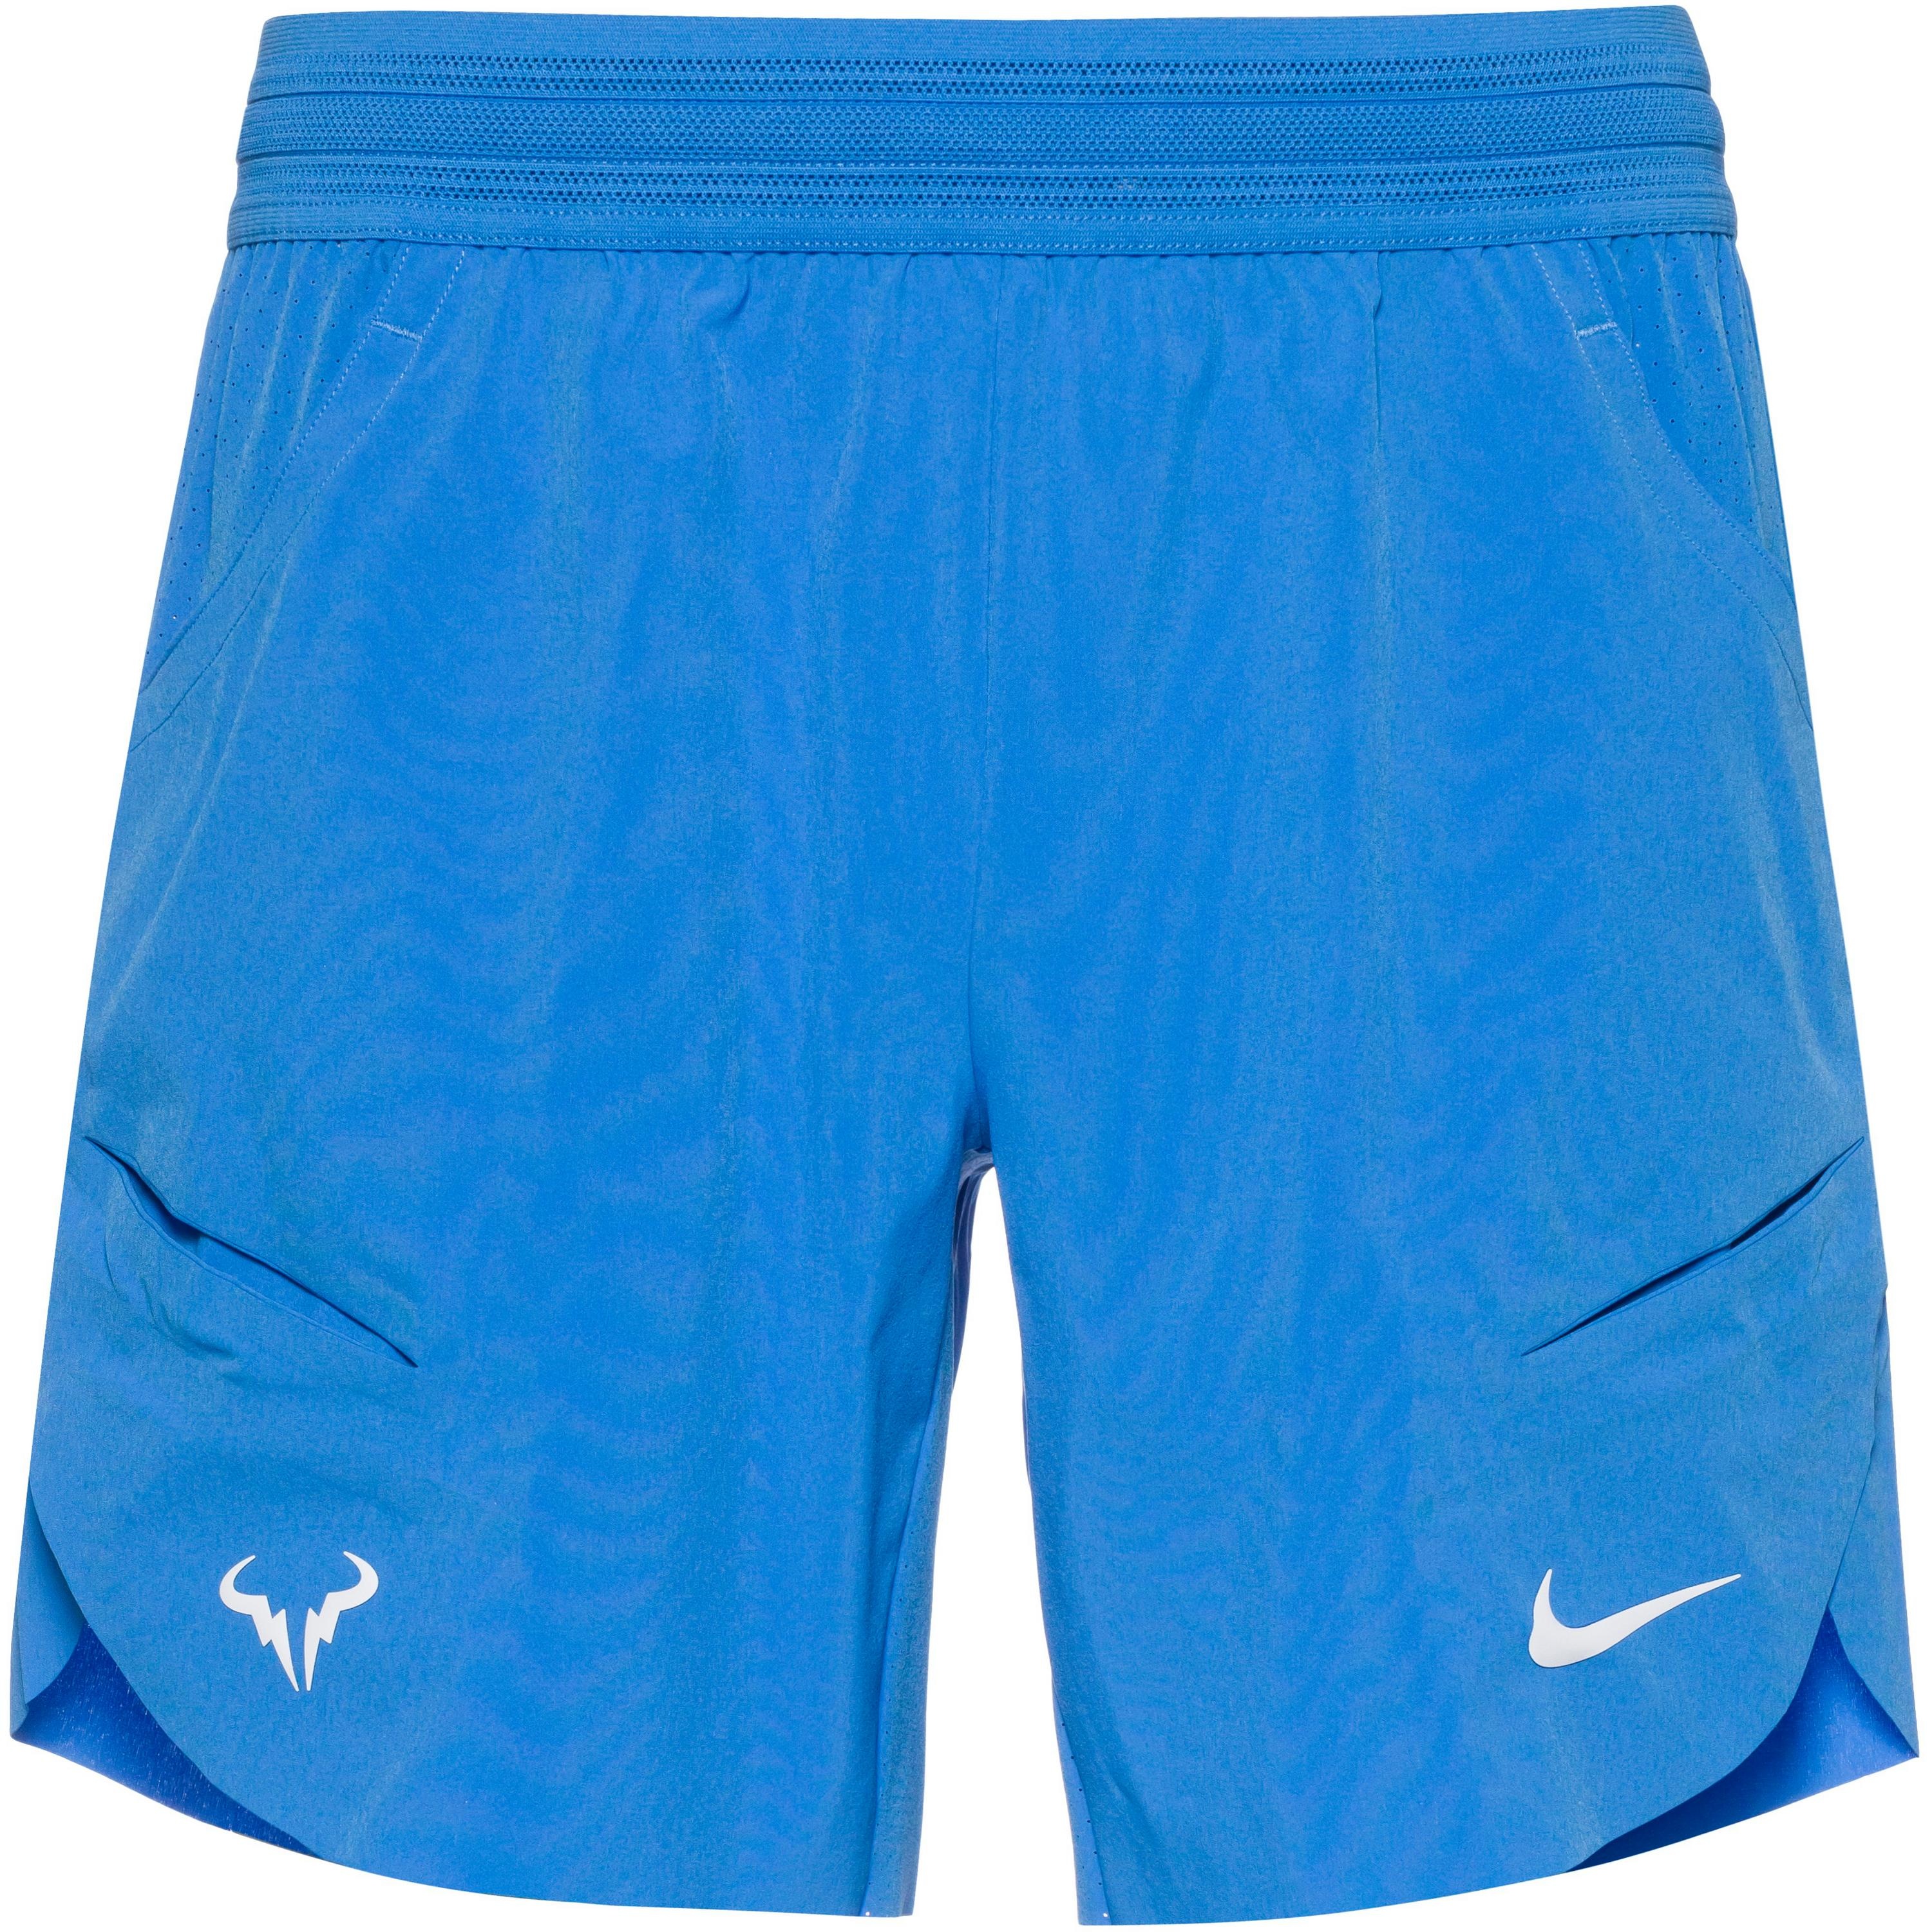 Nike Rafa Nadal Tennisshorts Herren in lt photo blue-lt lemon twist-white, Größe S - blau